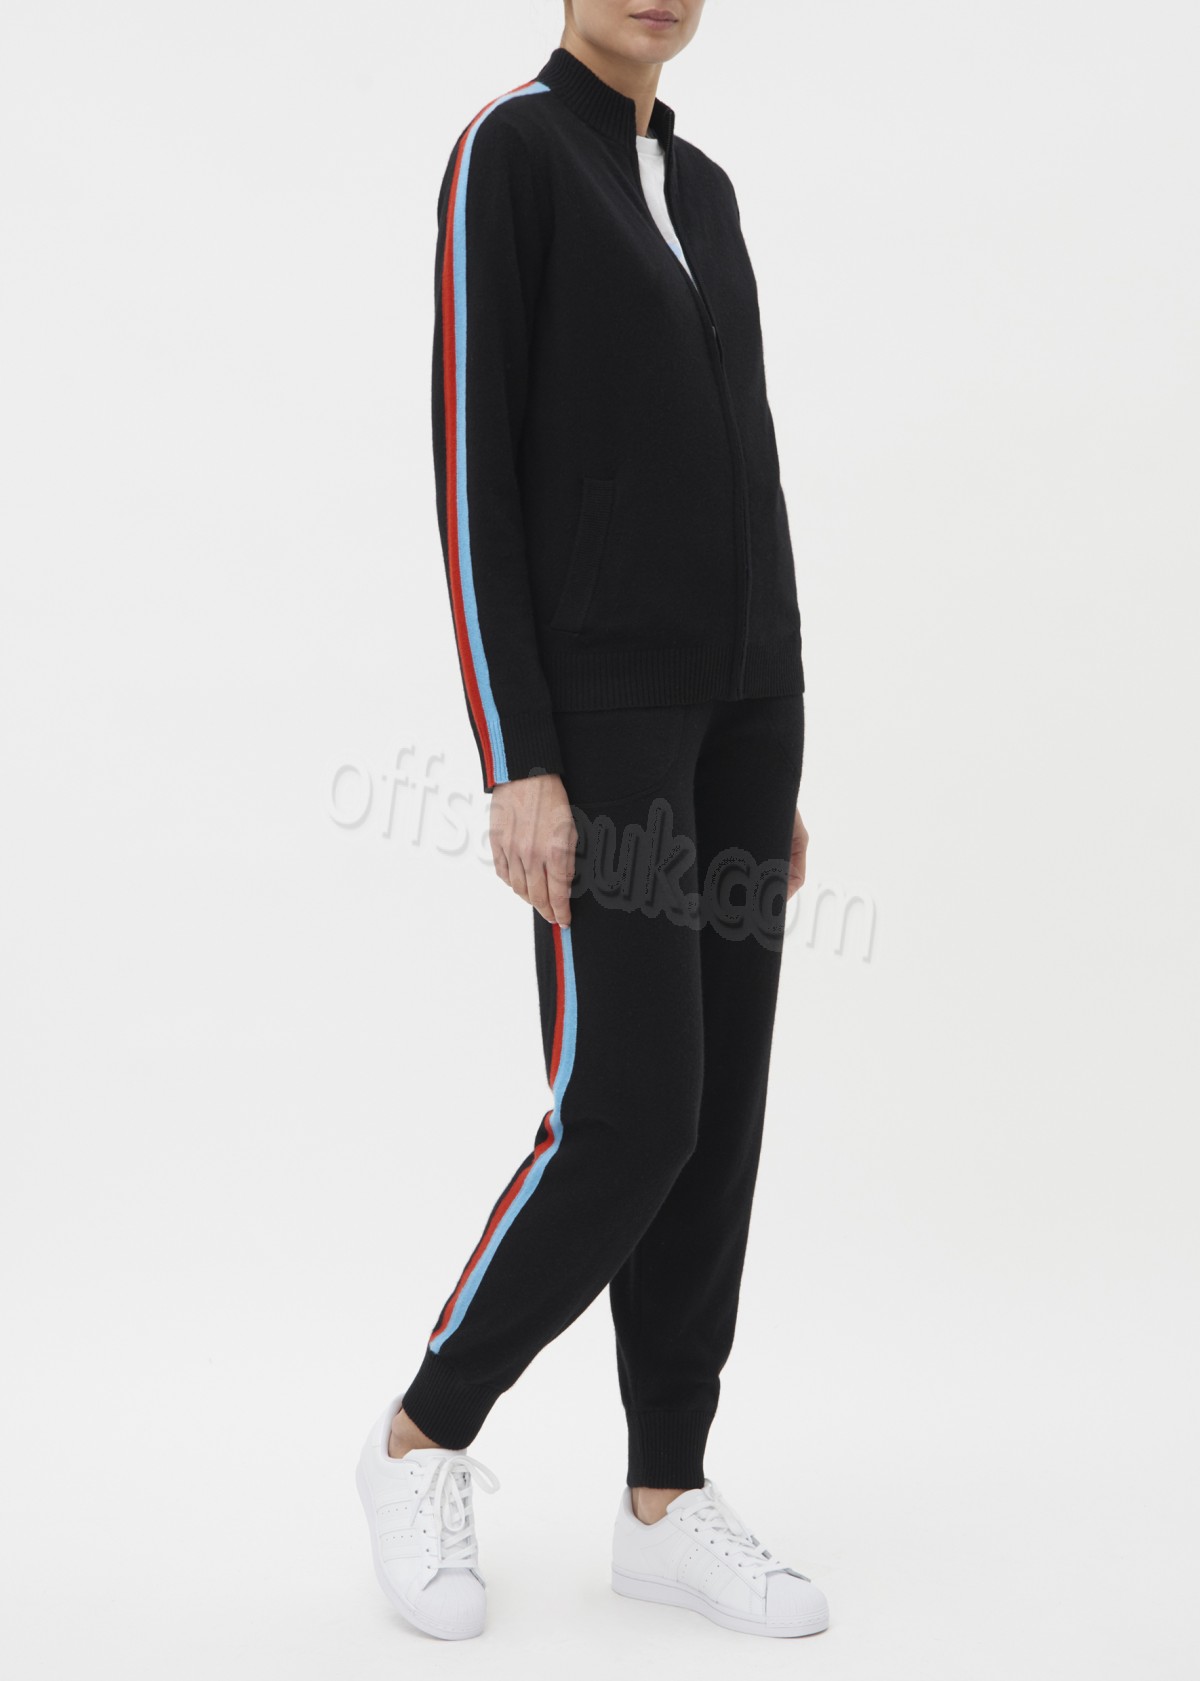 Bella Freud Meisel Stripe Cashmere Zip Up - -1